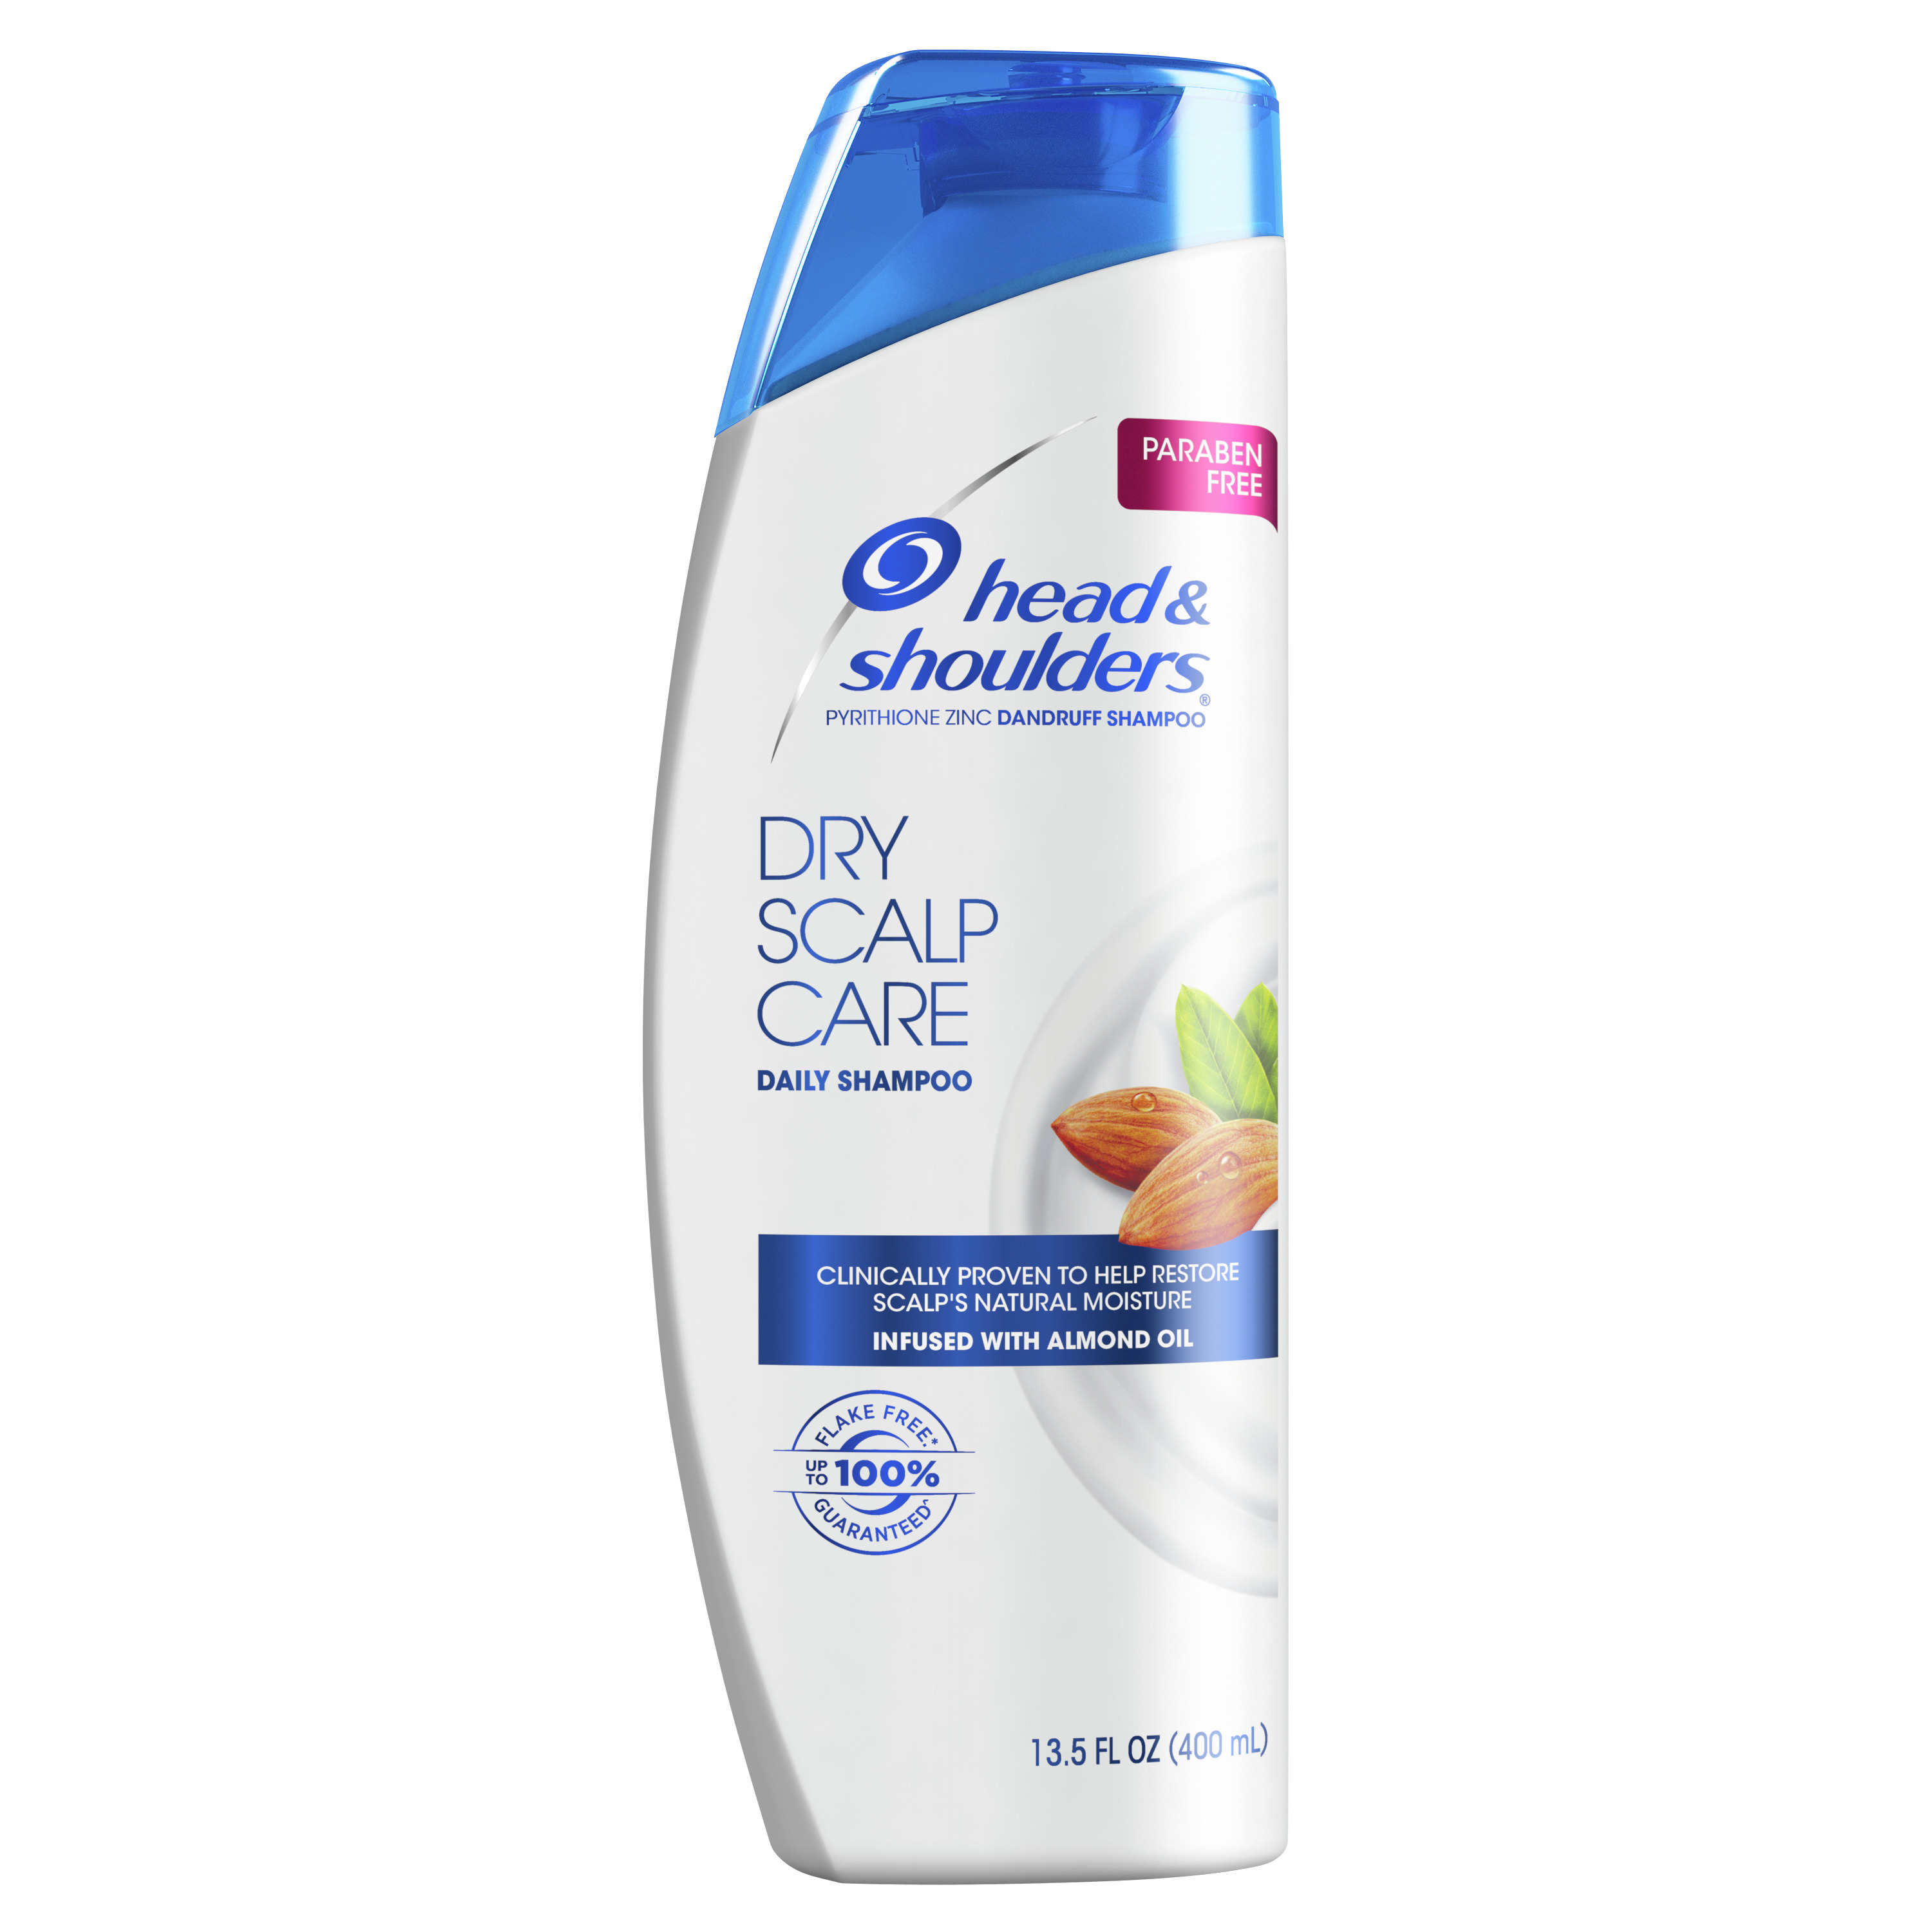 Head & Shoulders Anti-Dandruff Shampoo, Dry Scalp Care, 13.5 fl oz - image 1 of 7